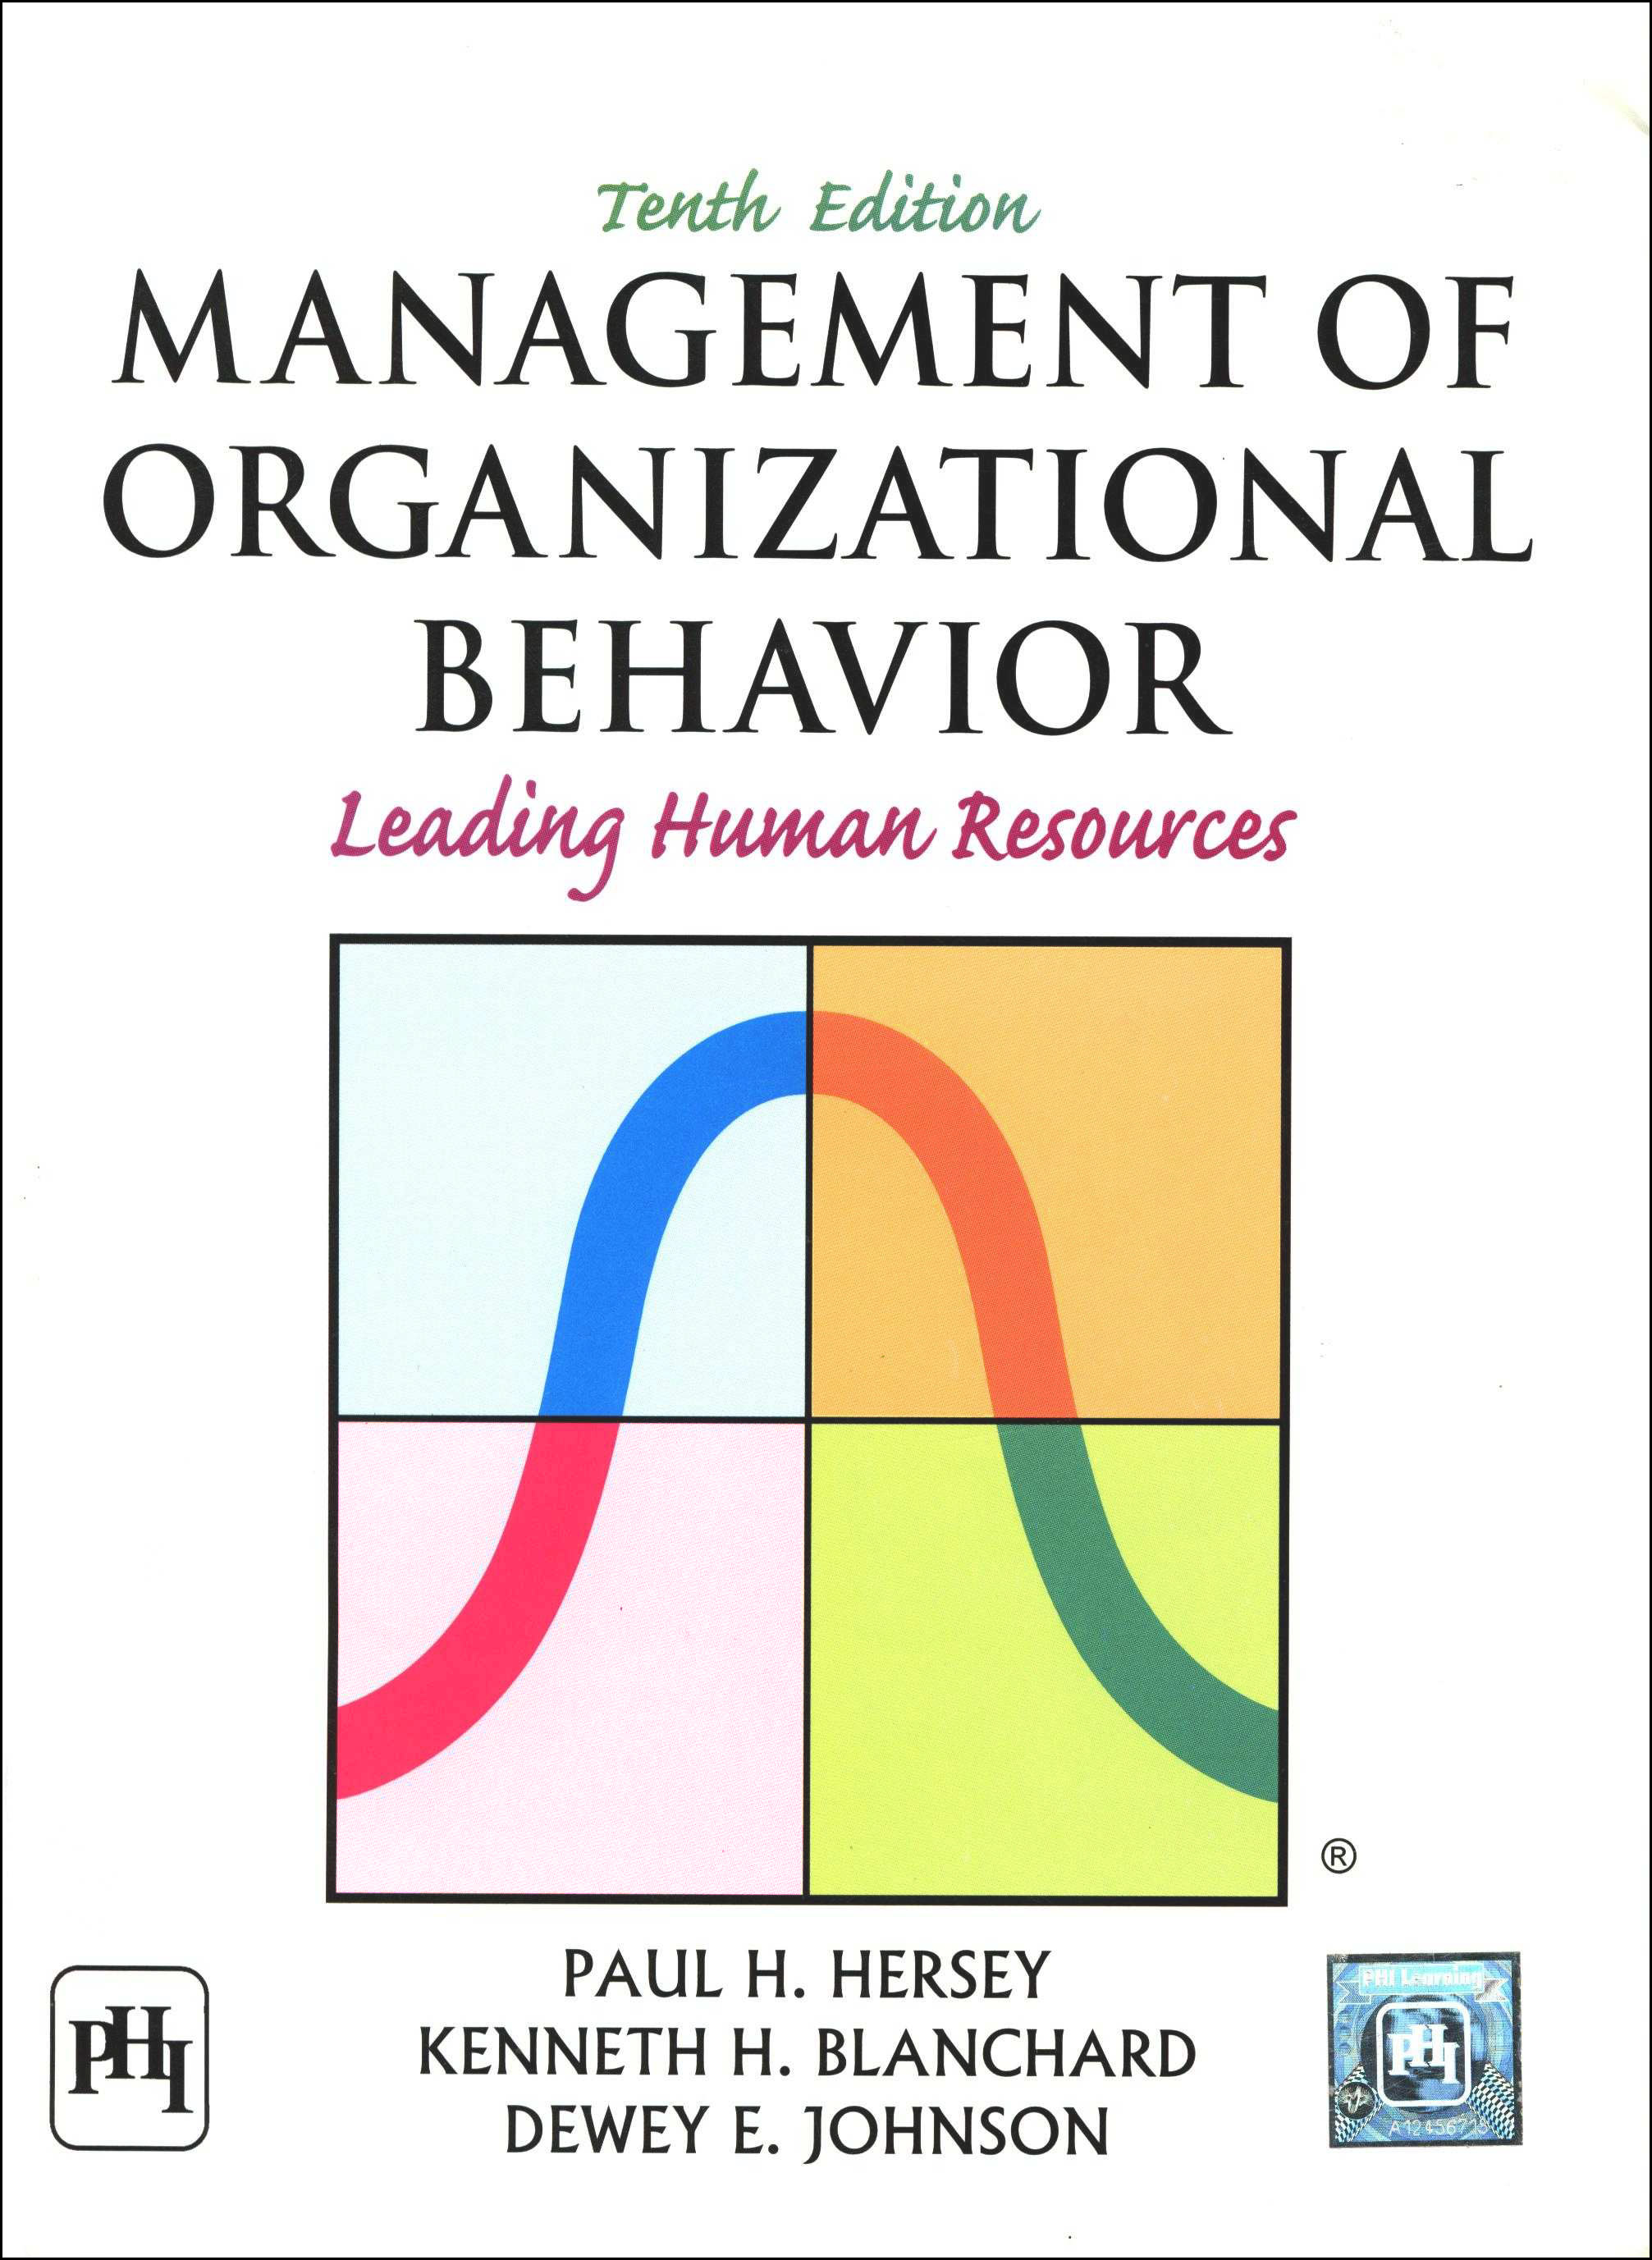 organizational behavior and human decision processes